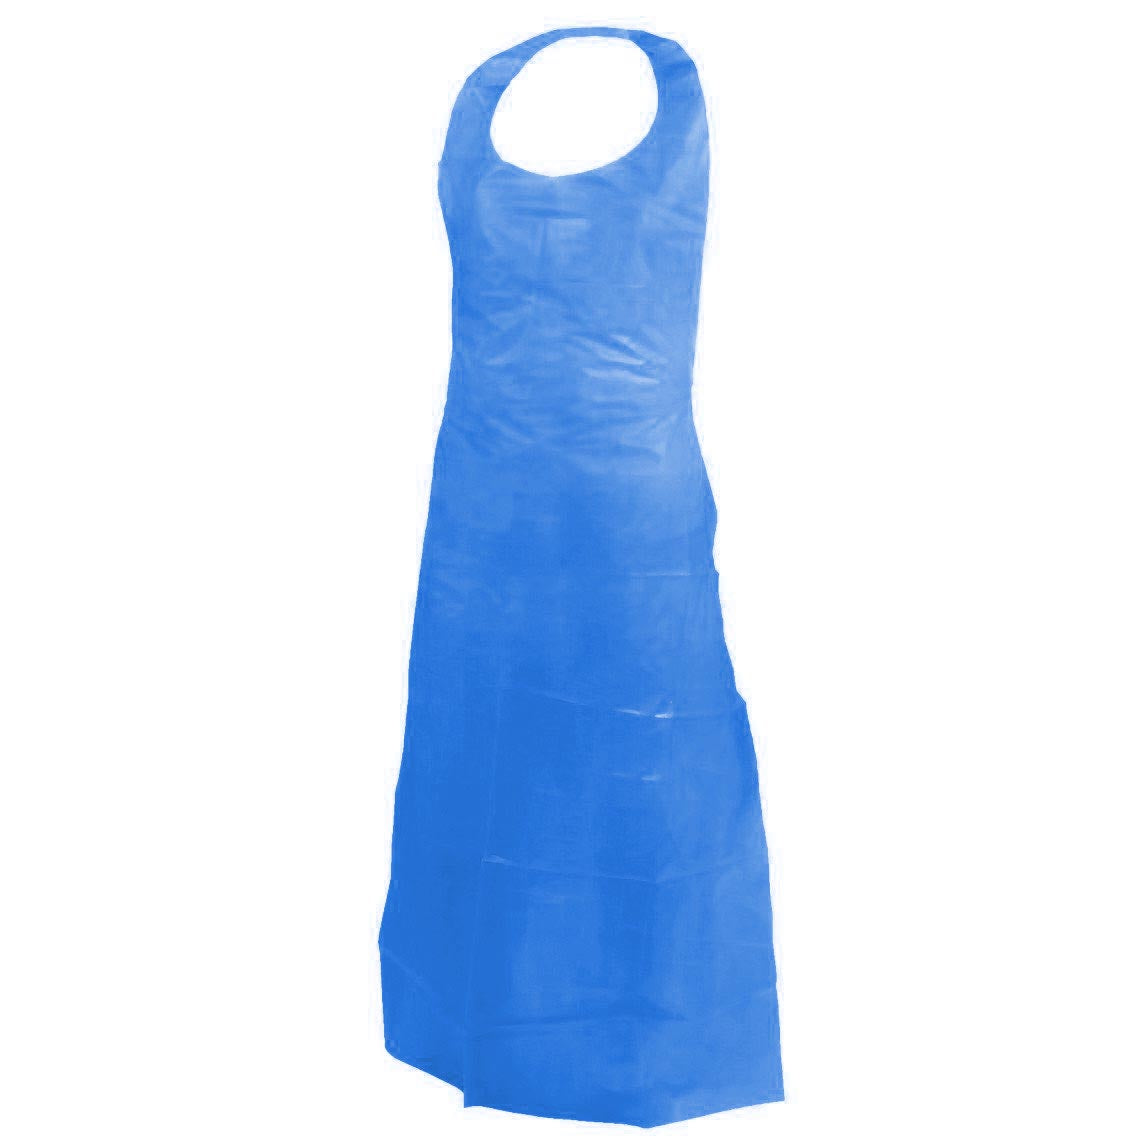 Blue Disposable Polyethylene Apron (Case of 1000 Aprons)